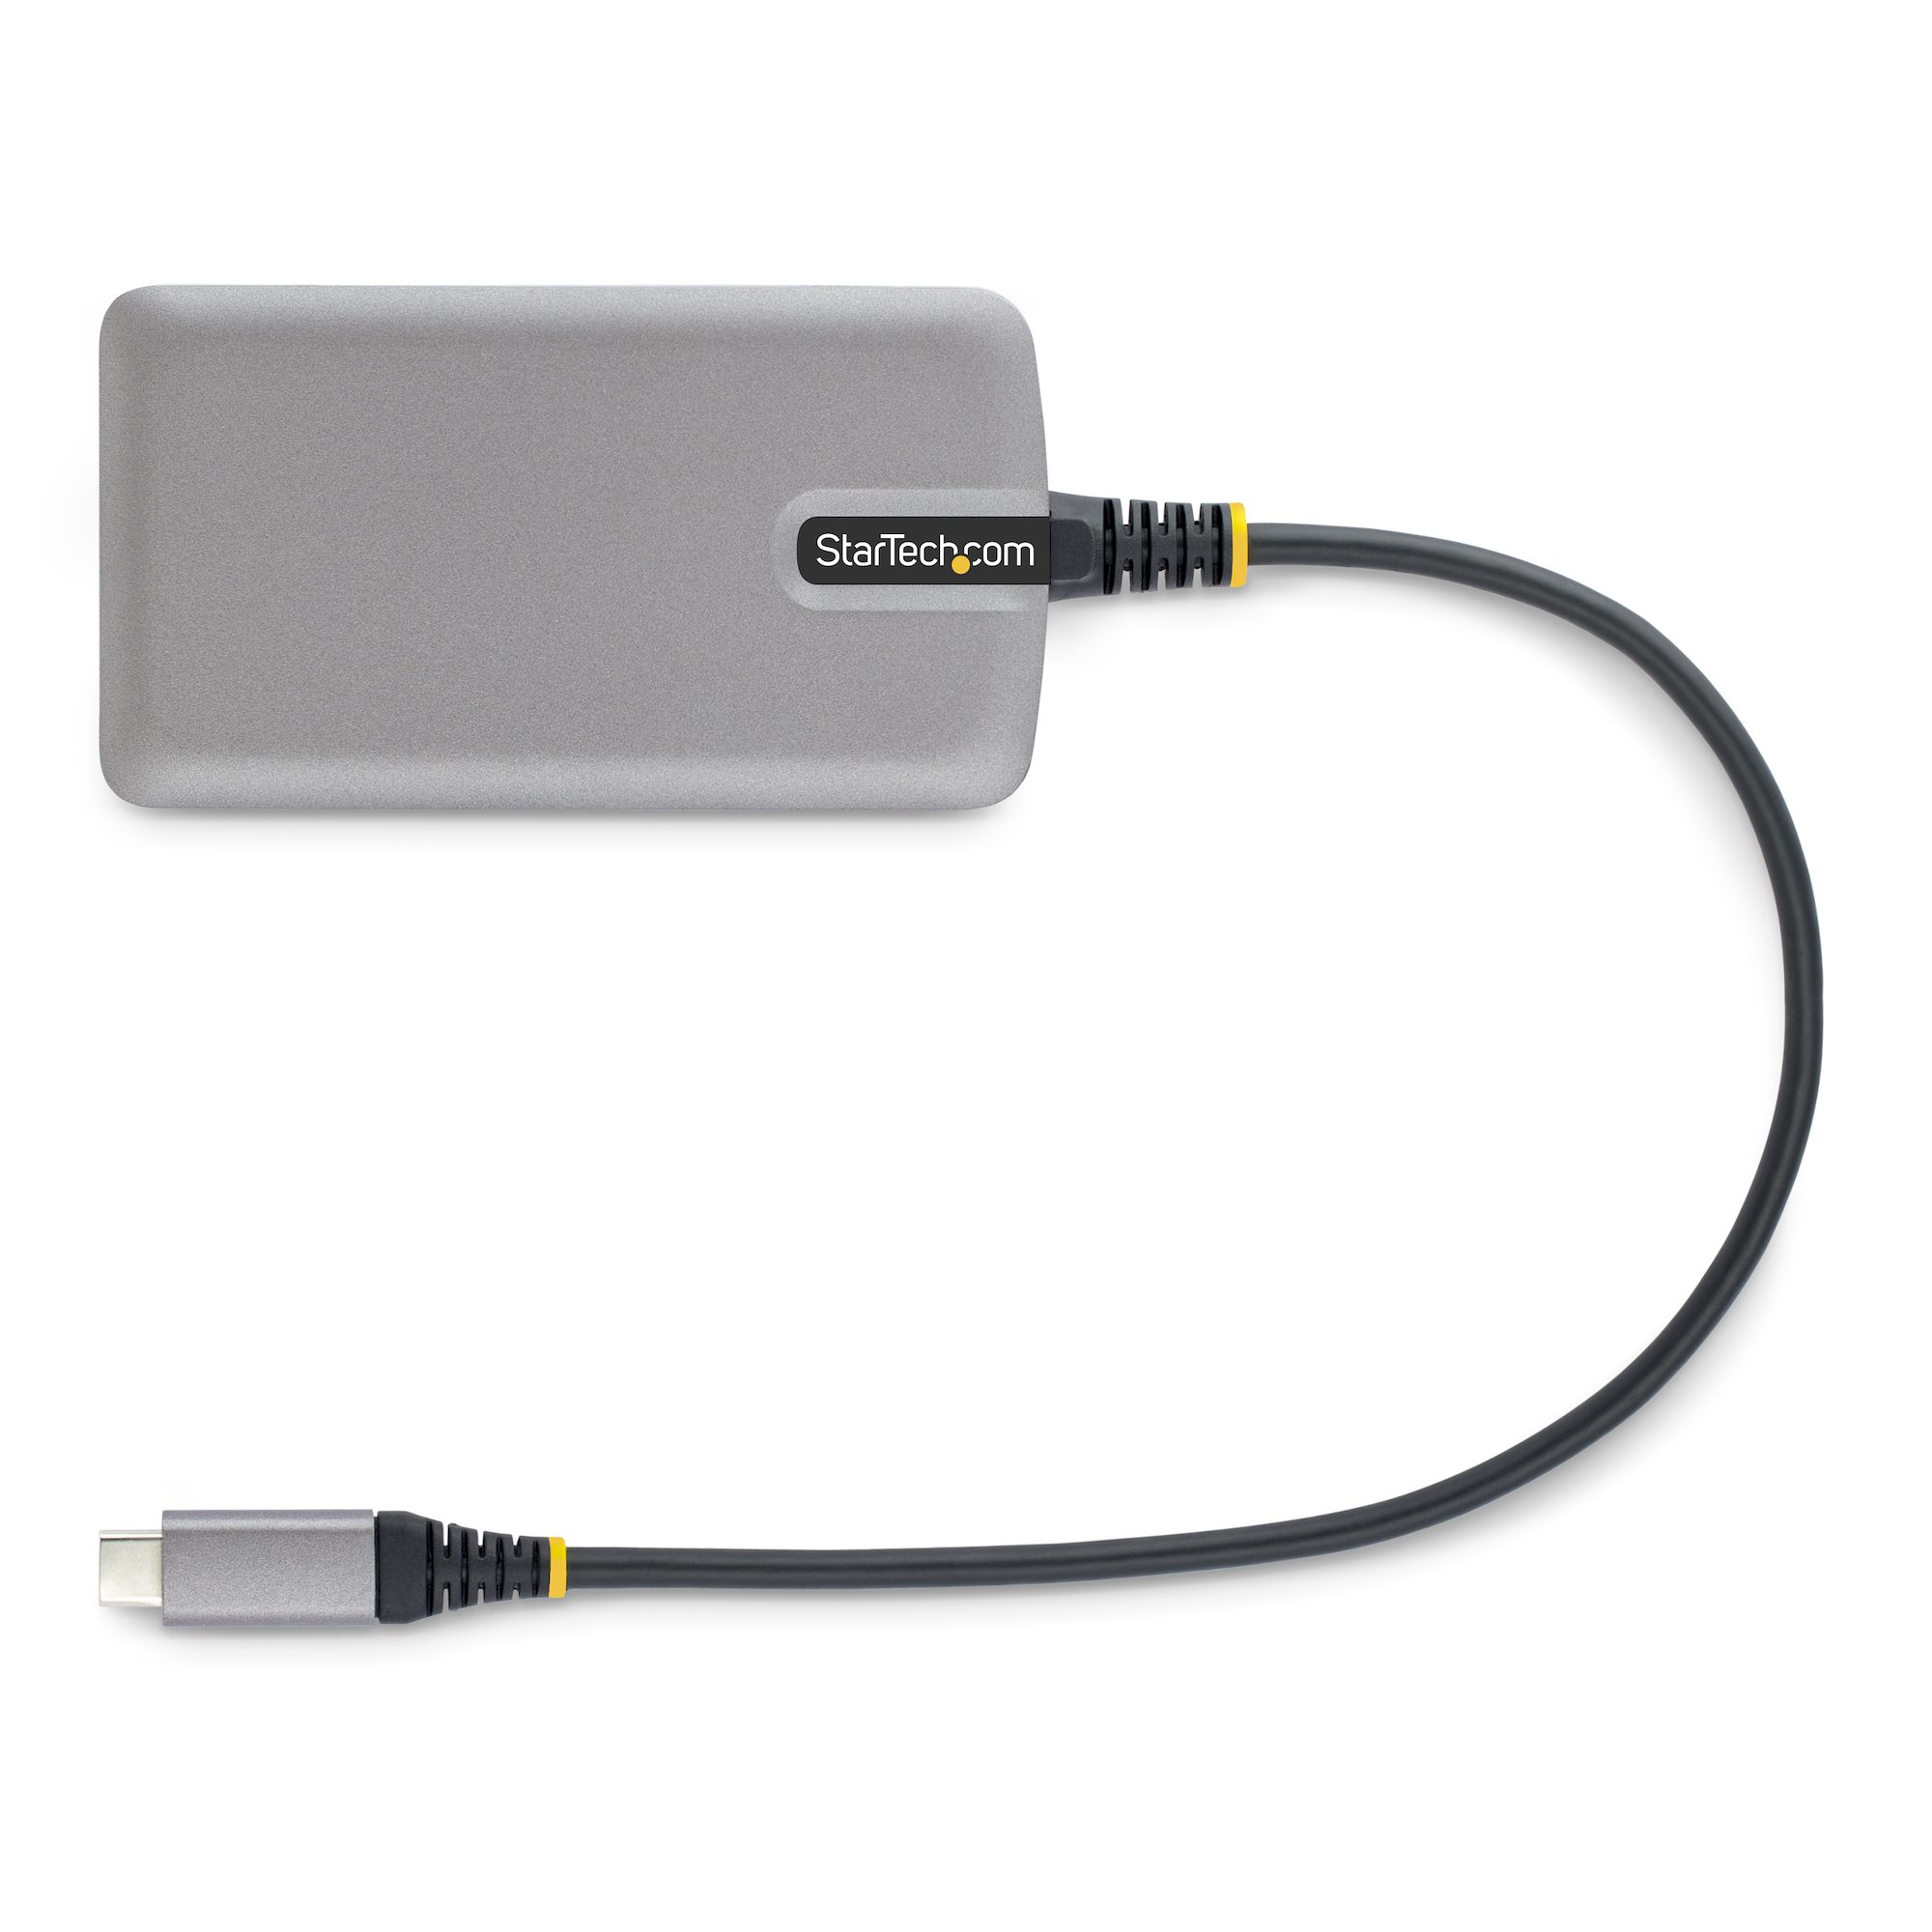 USB-C Gigabit Ethernet Converter Adapter with 3-Port USB 3.0 Hub